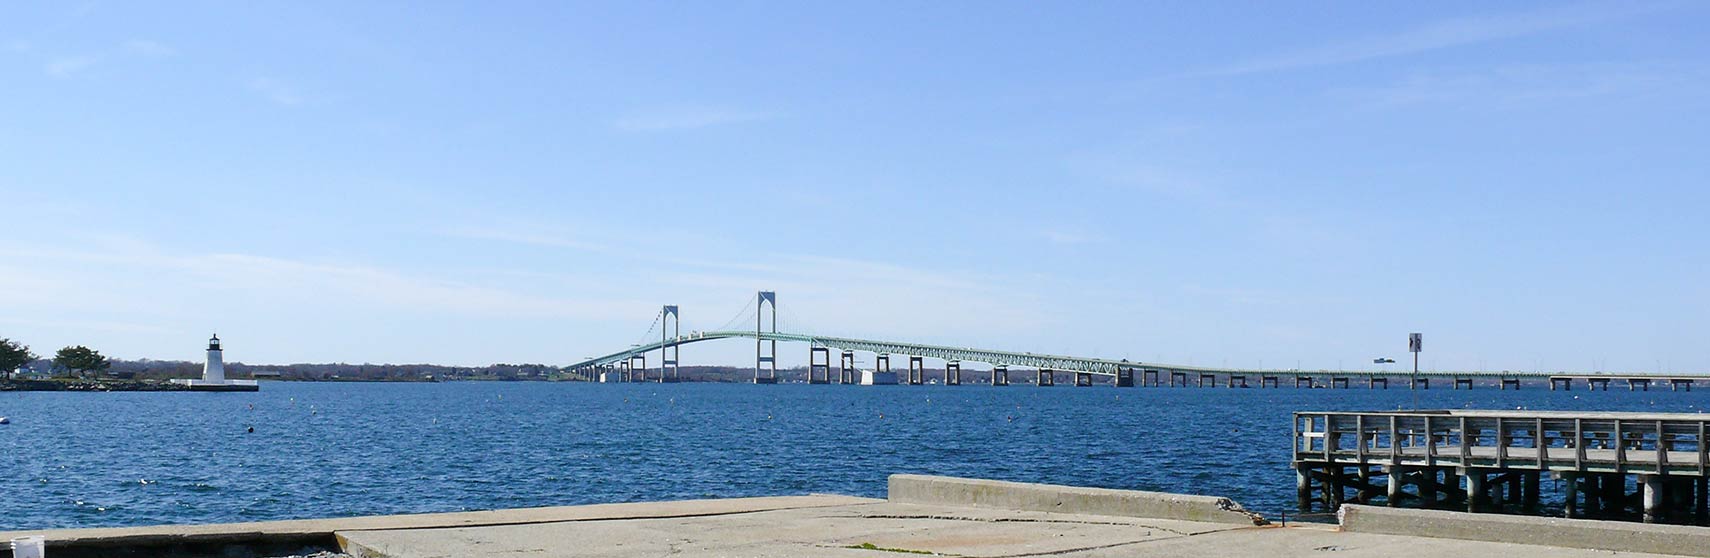 Claiborne Pell Bridge, Narragansett Bay